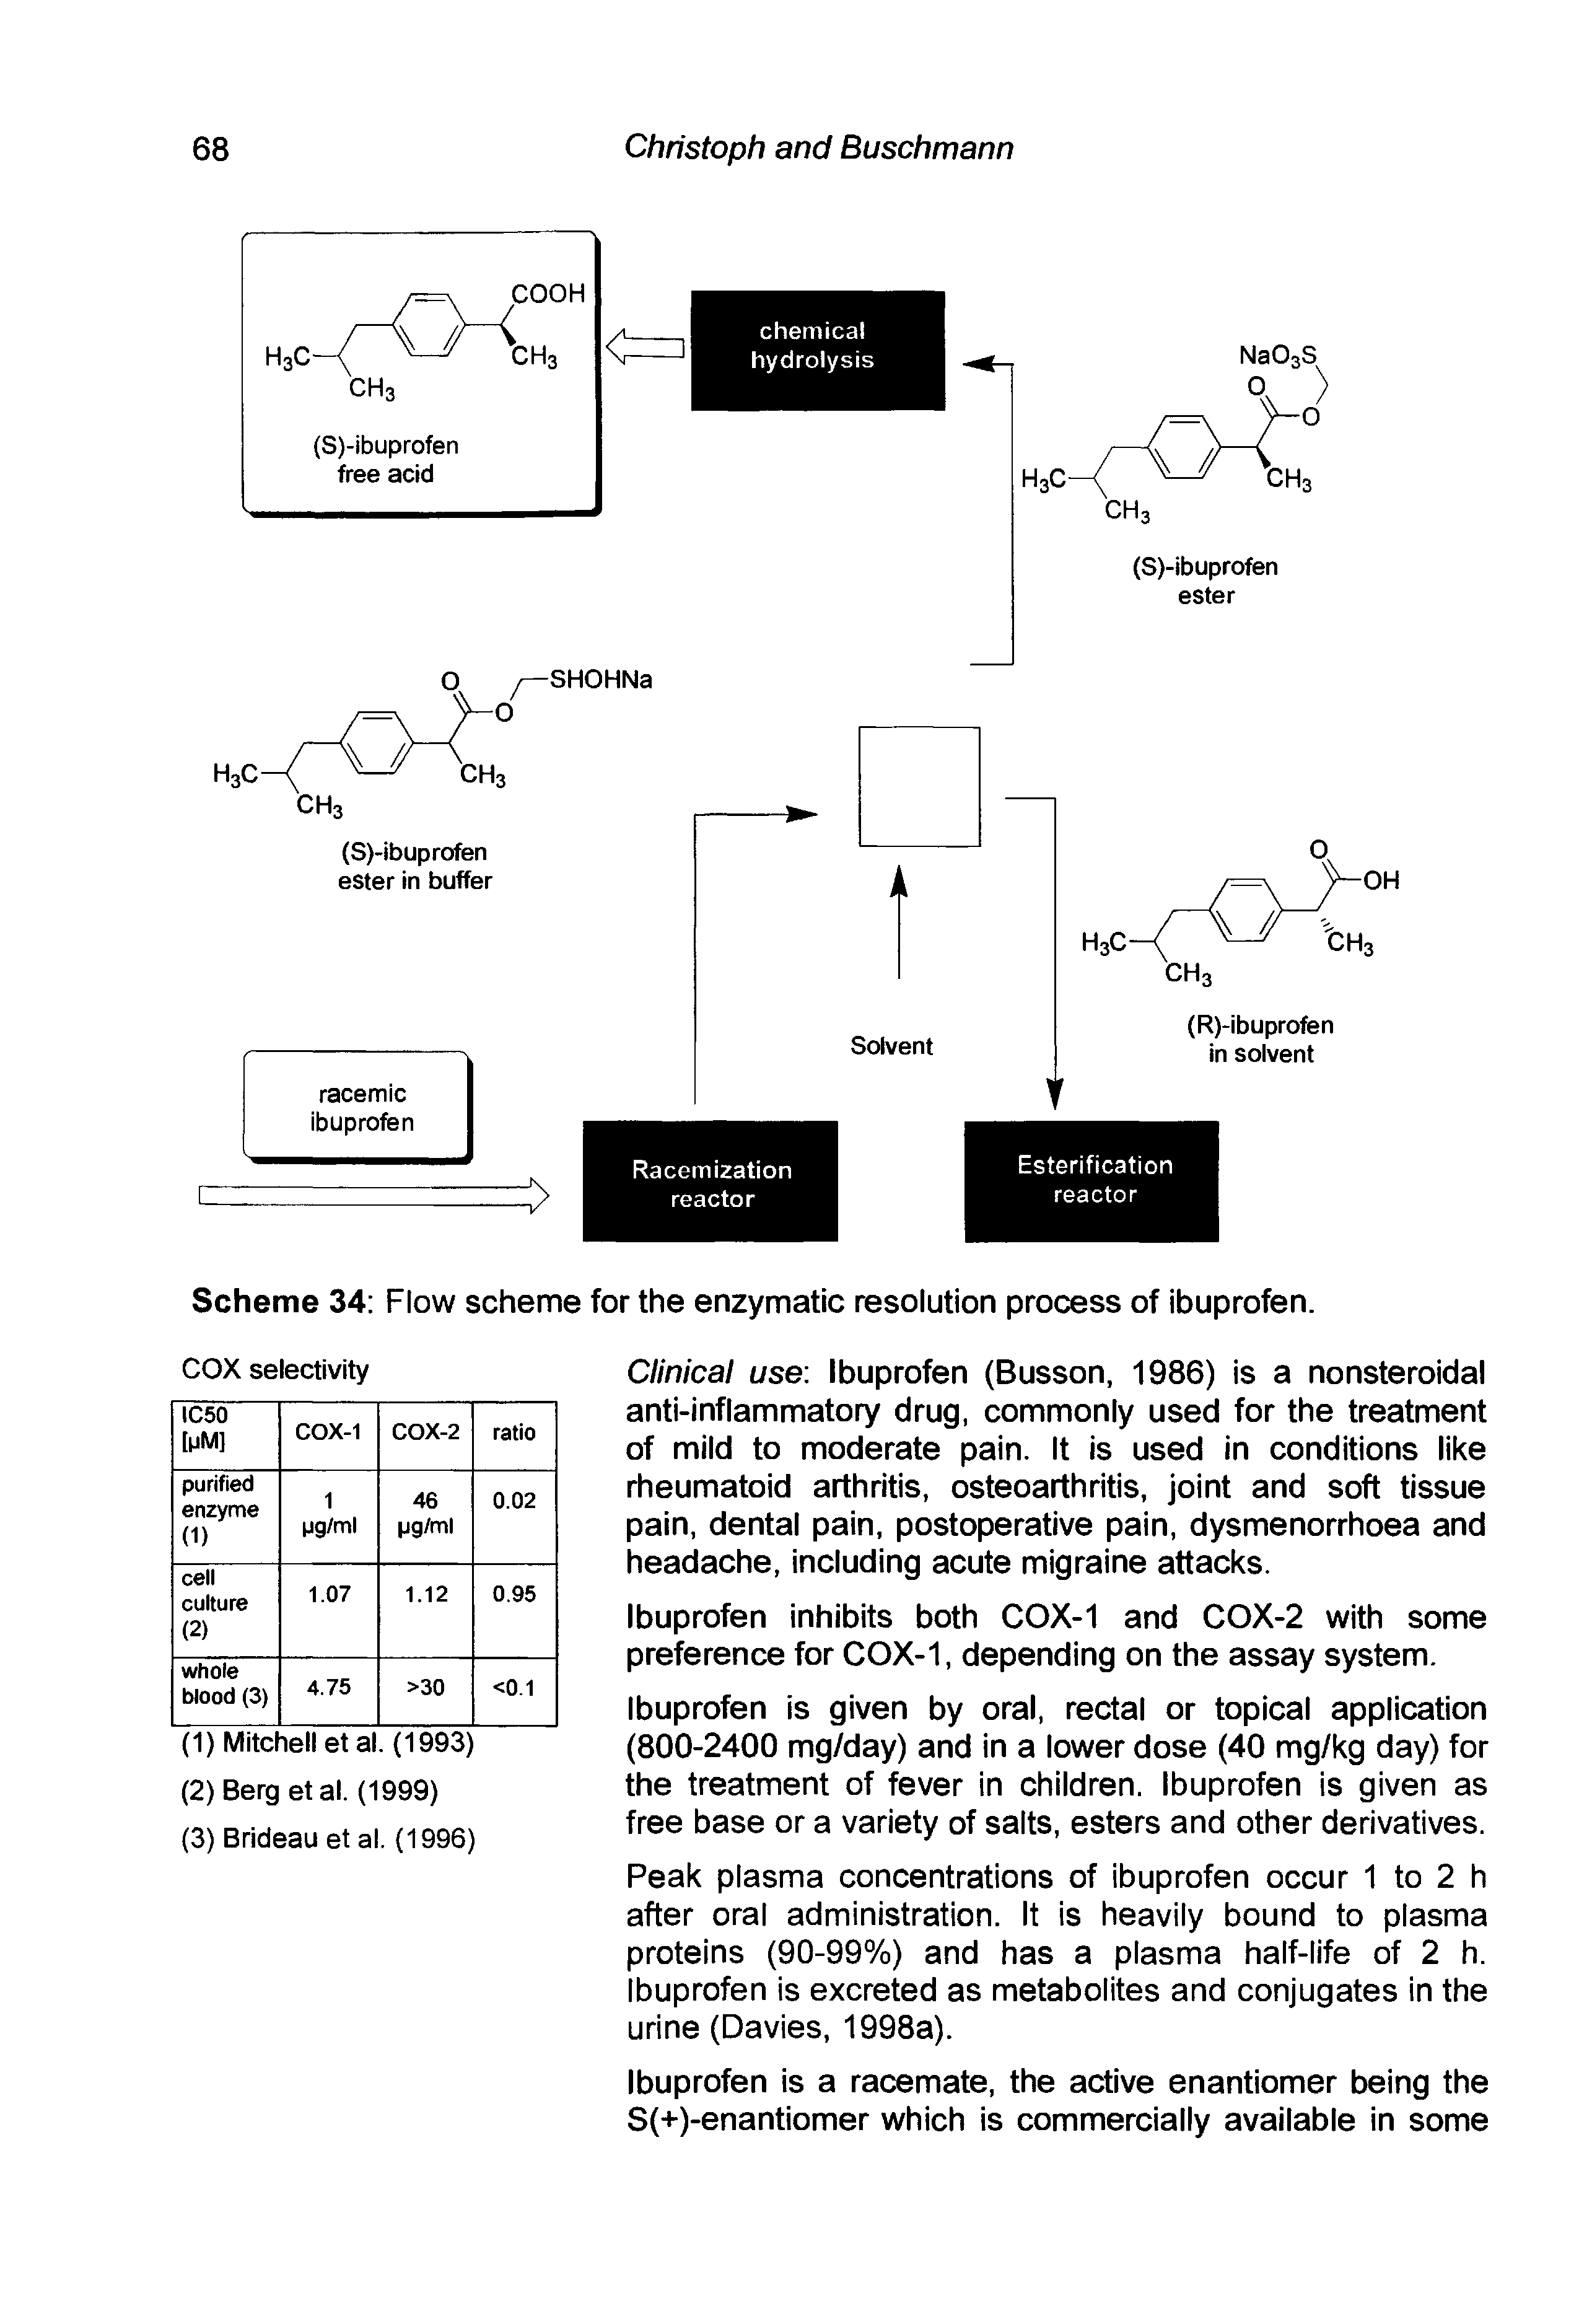 Scheme 34 Flow scheme for the enzymatic resolution process of ibuprofen.